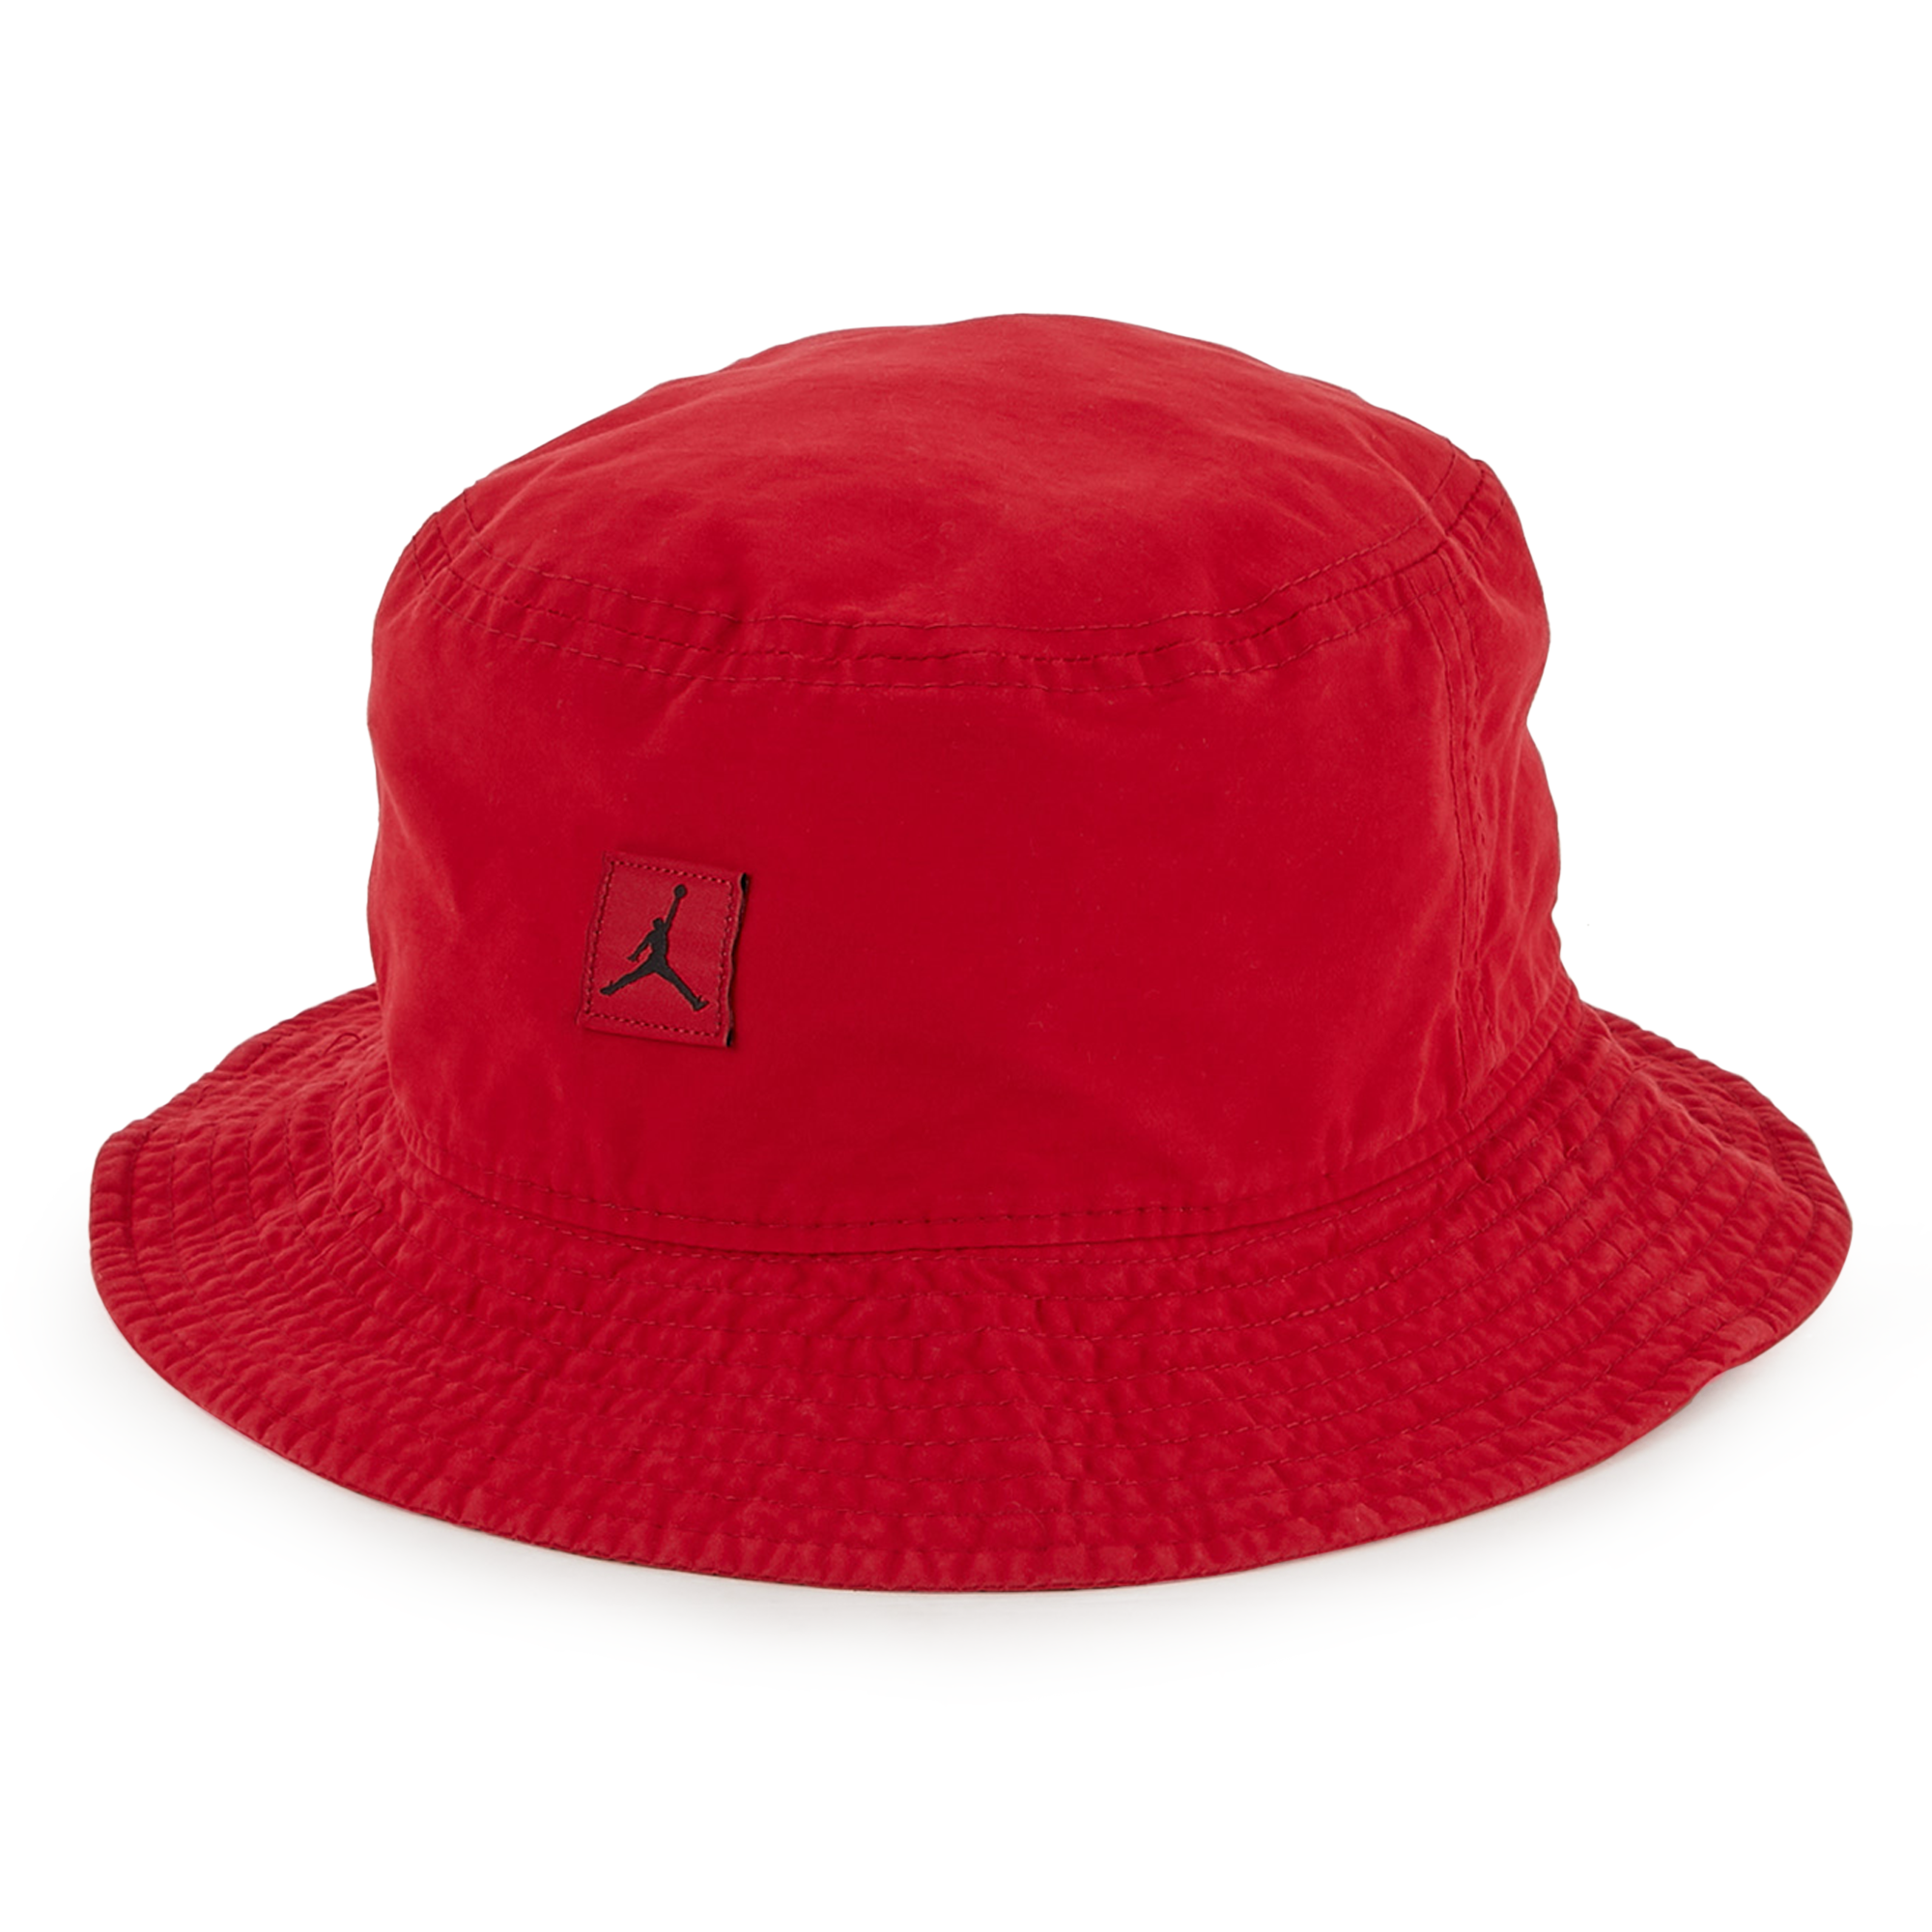 Jordan Bob Bucket Hat  Jumpman  - rouge/noir - Size: s/m - unisex